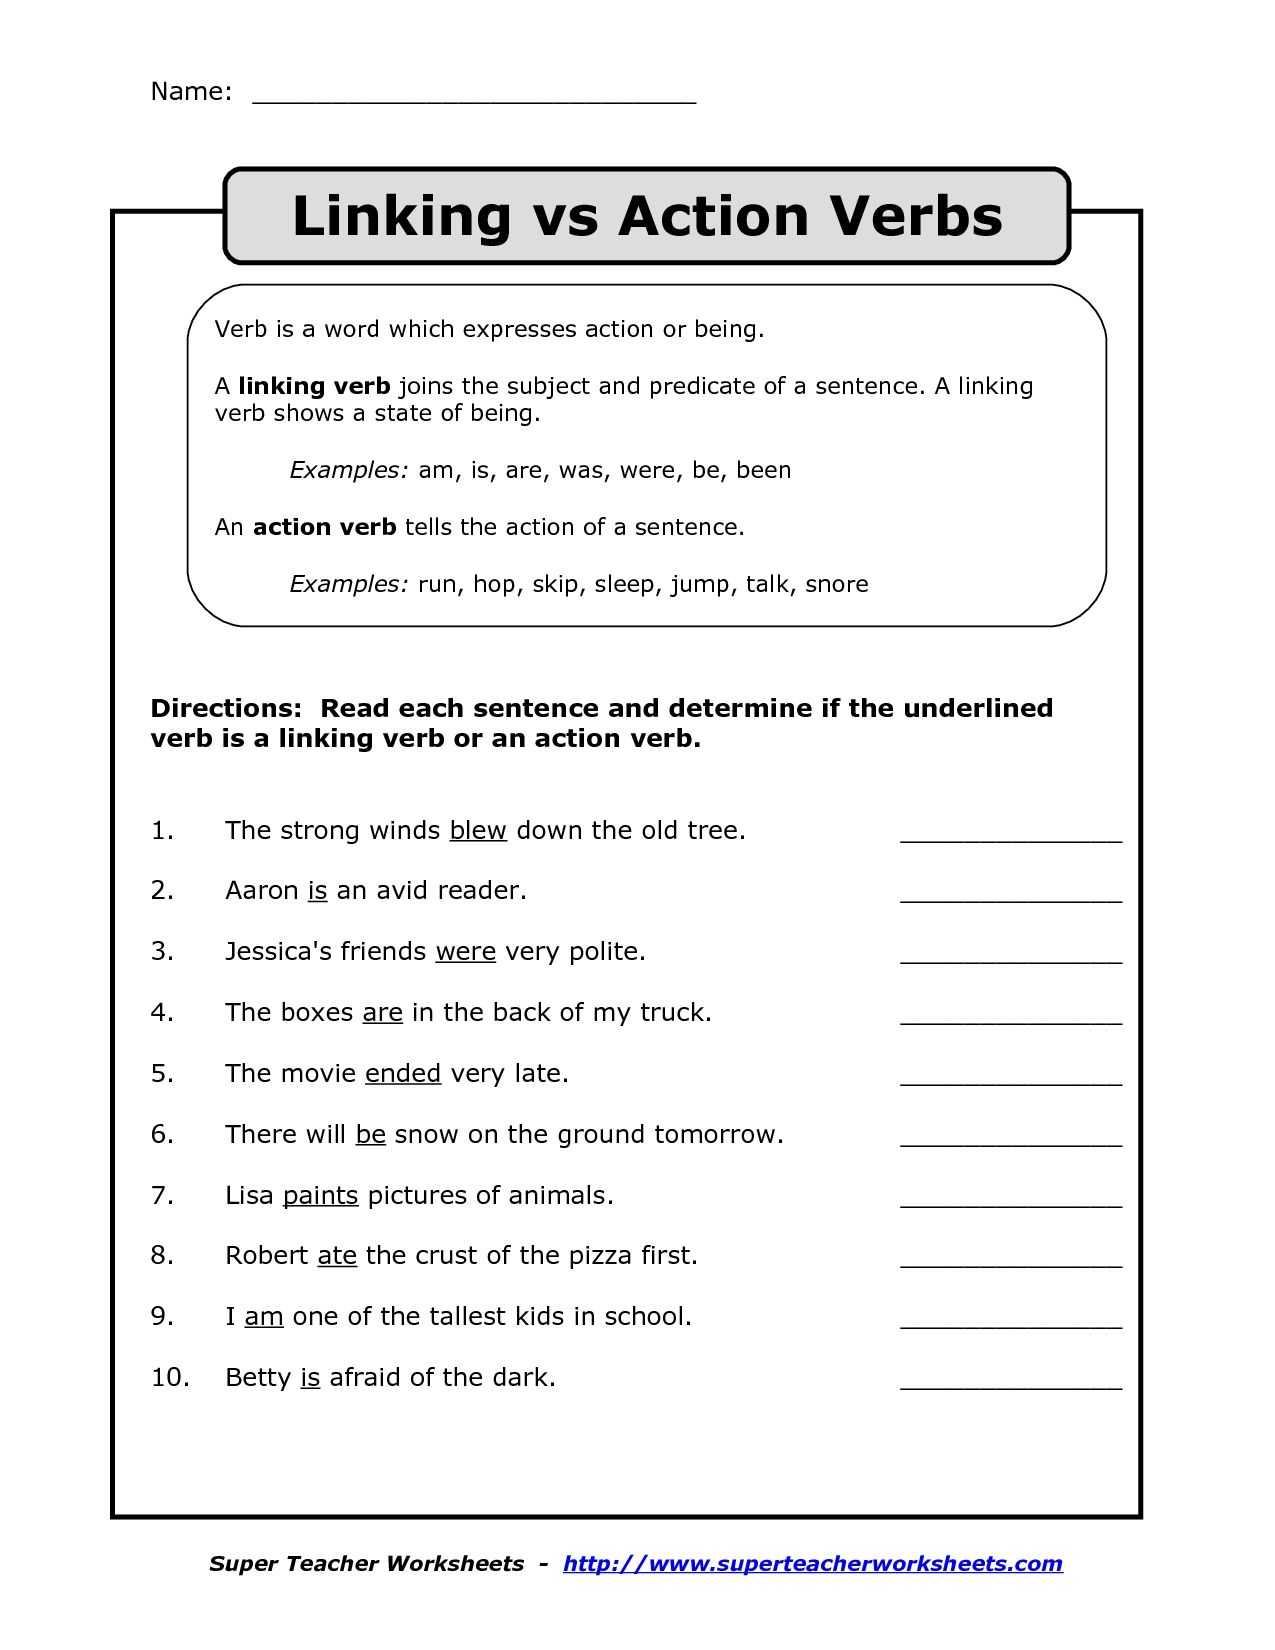 Regular Irregular Verbs Worksheet Also Study Action and Linking Verbs Worksheet 5th Grade Danasrhgtop